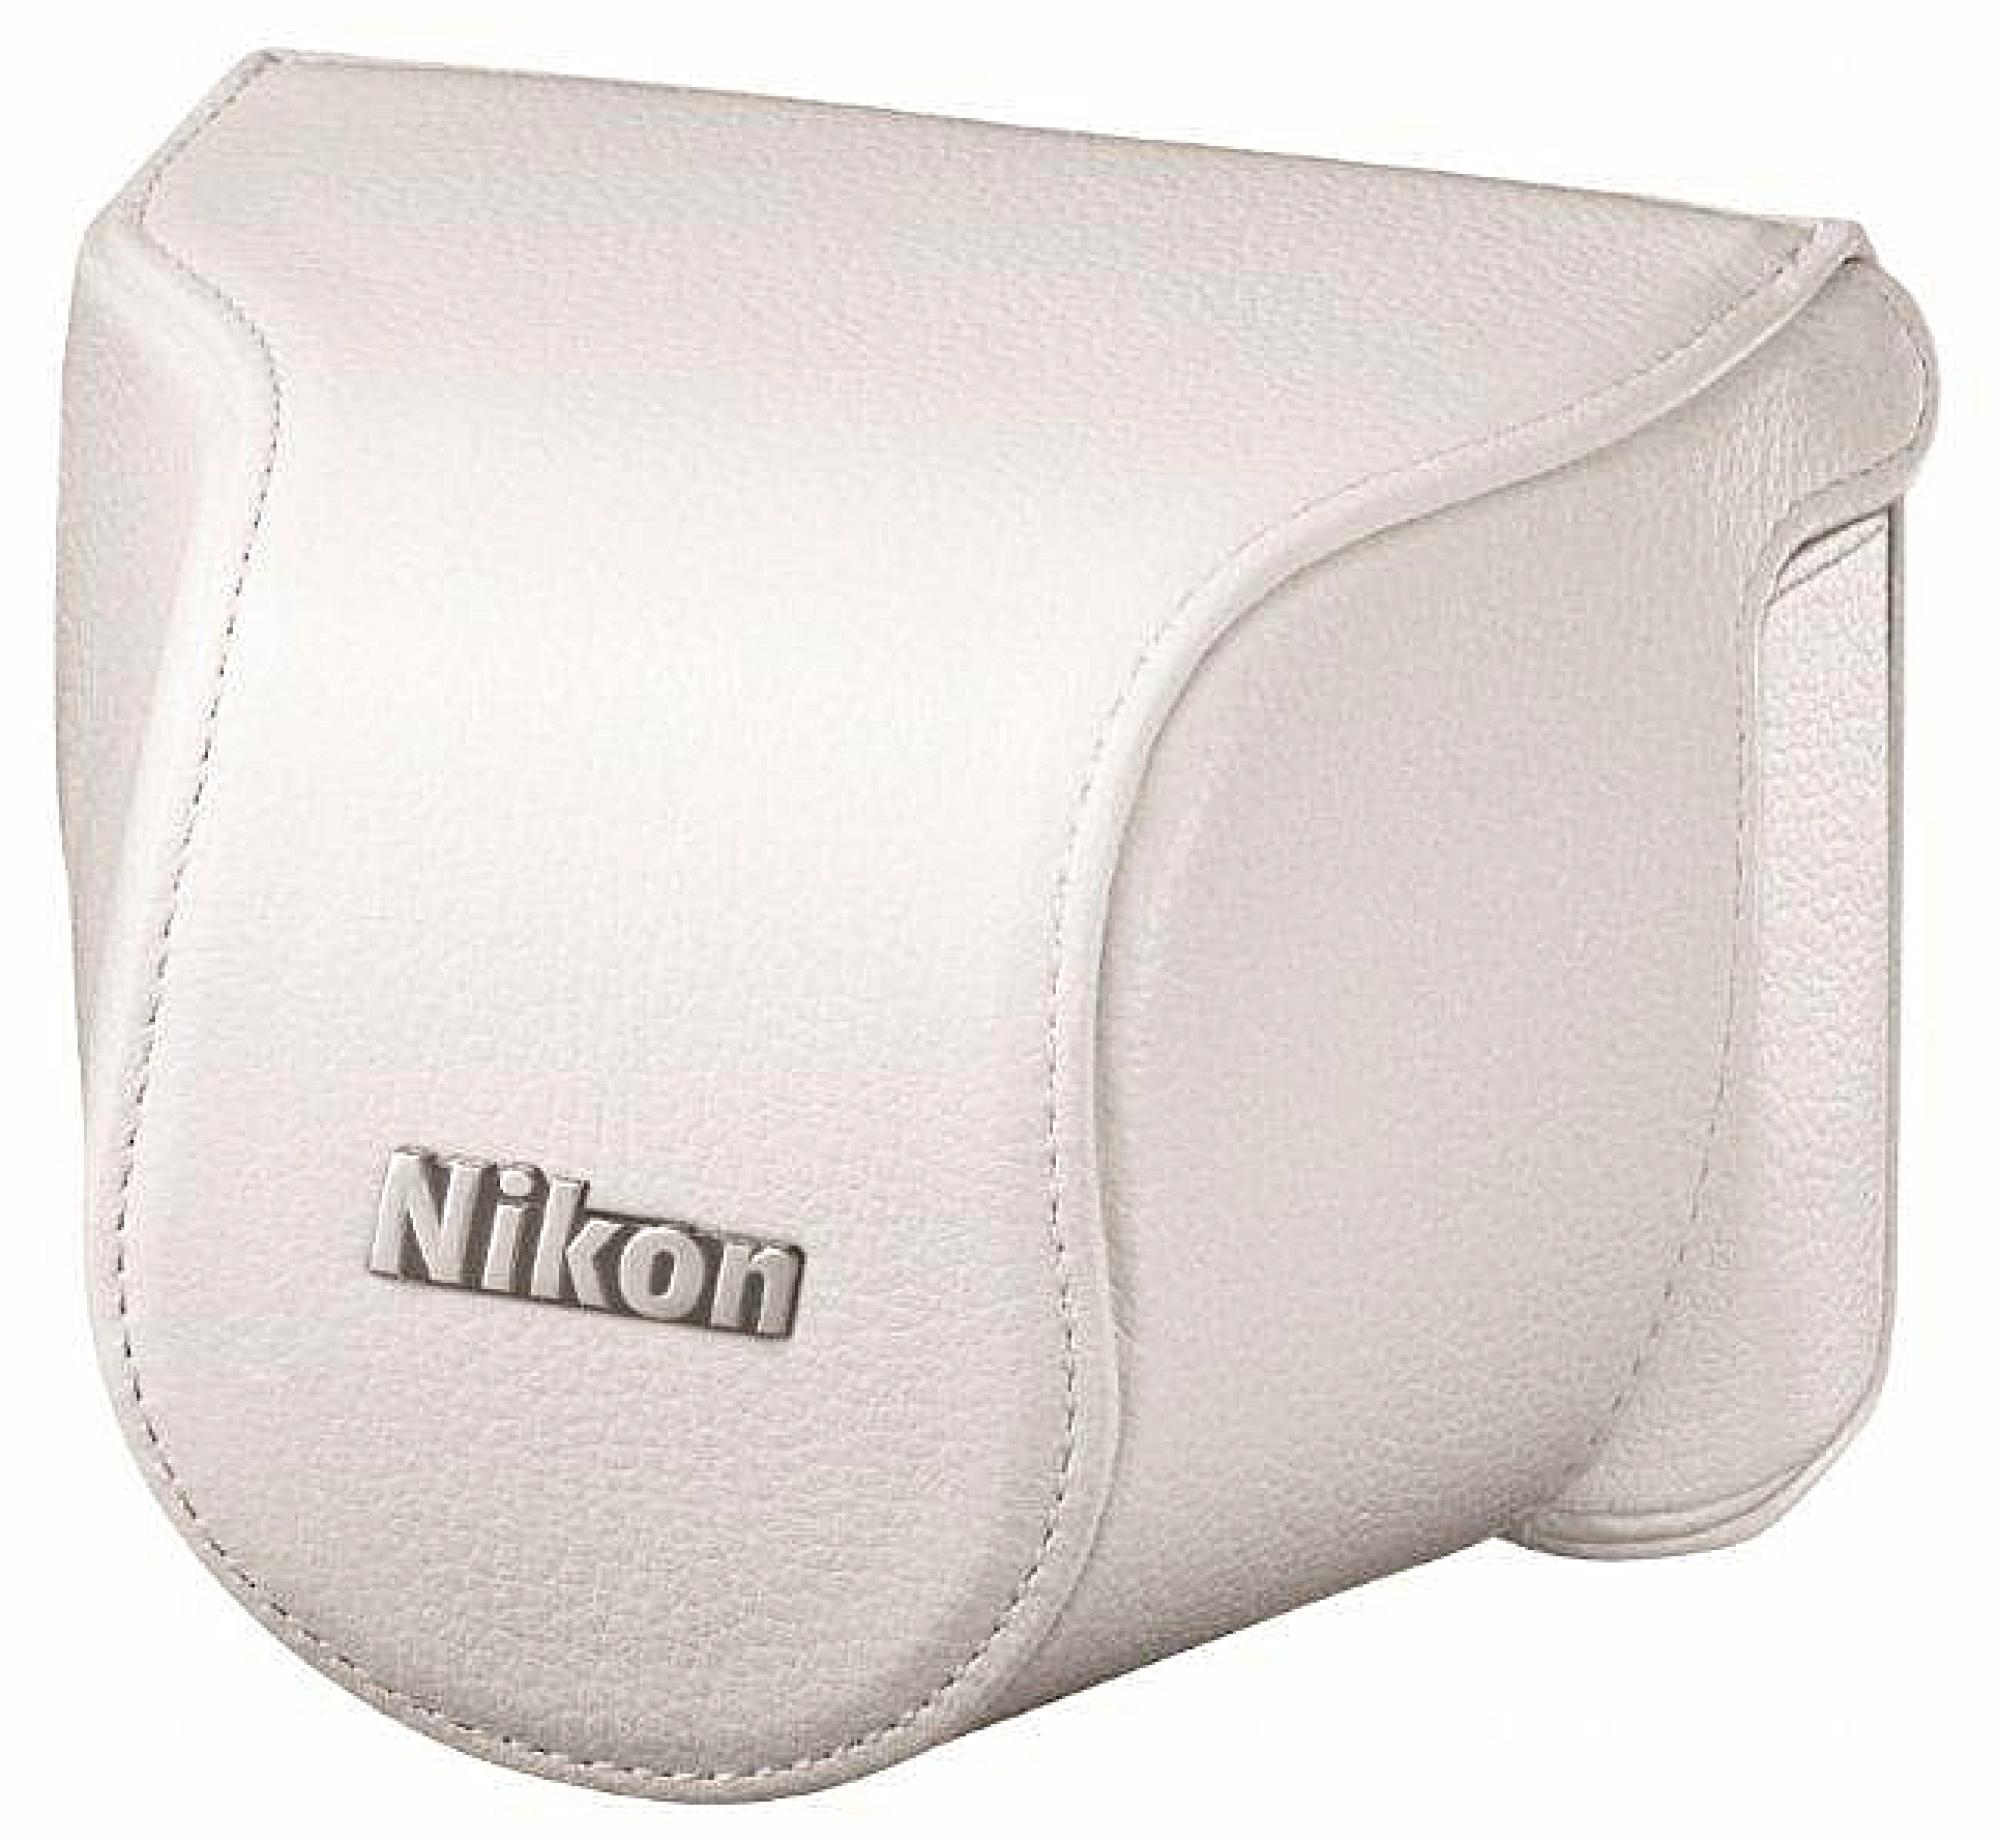 NIKON AF-S N - 14-24mm 1:2,8G Nikon ED, mm 14 AF-S, mm für 24 f/2.8 NIKKOR F-Mount, ED Schwarz) (Objektiv